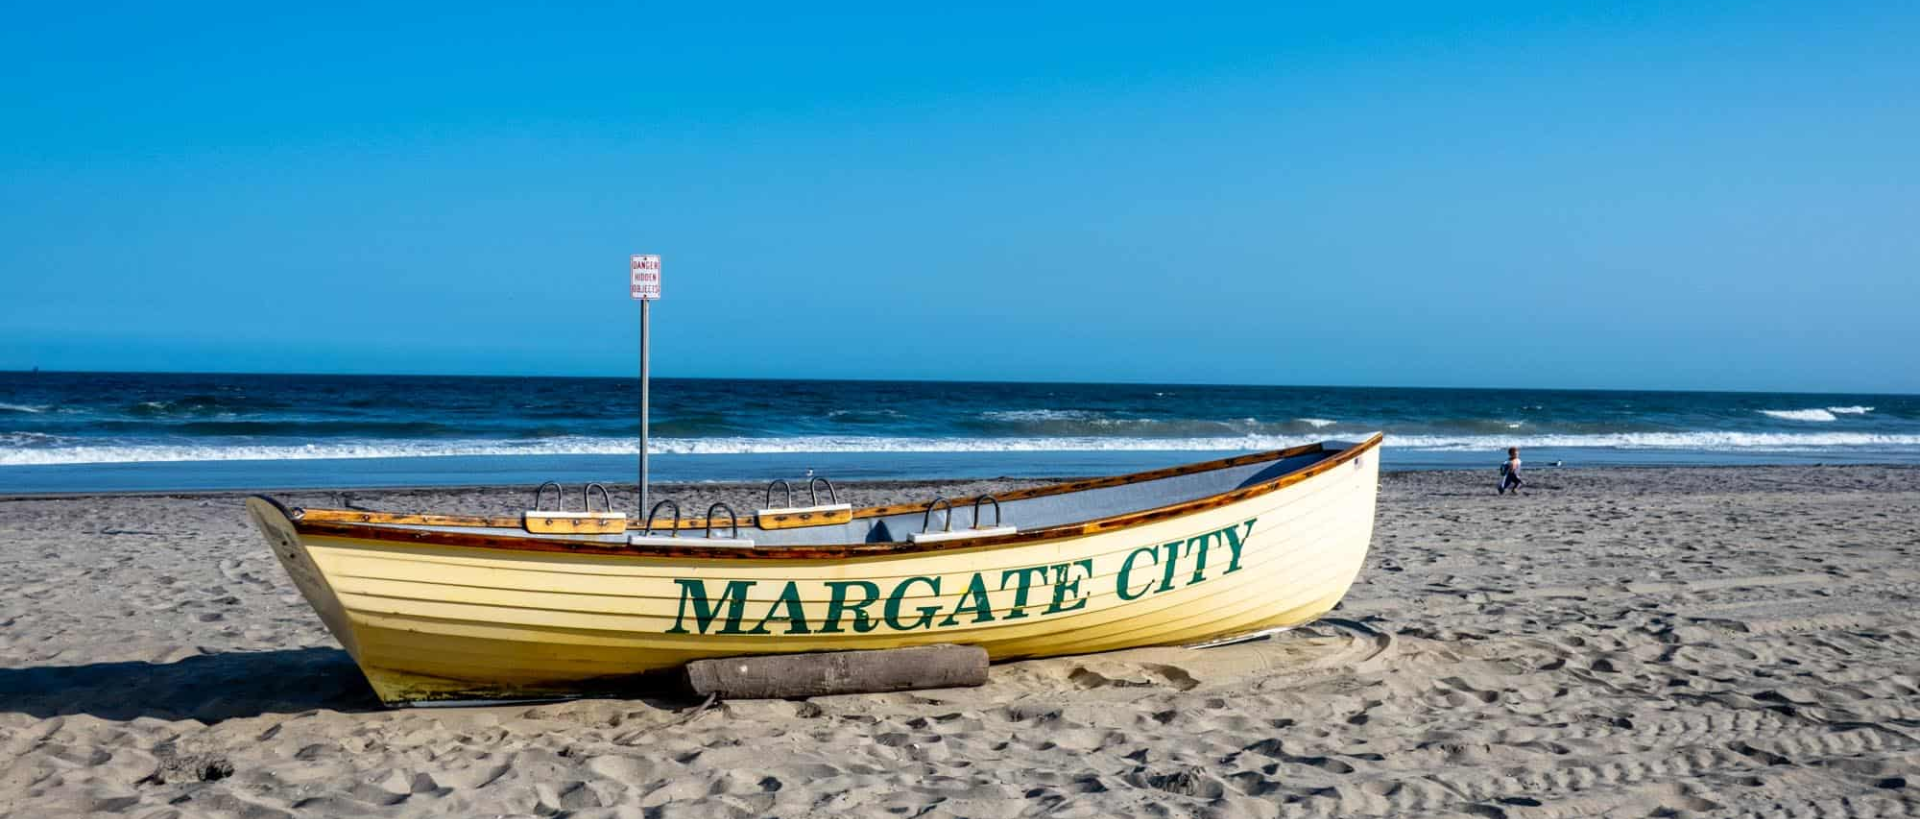 Margate city